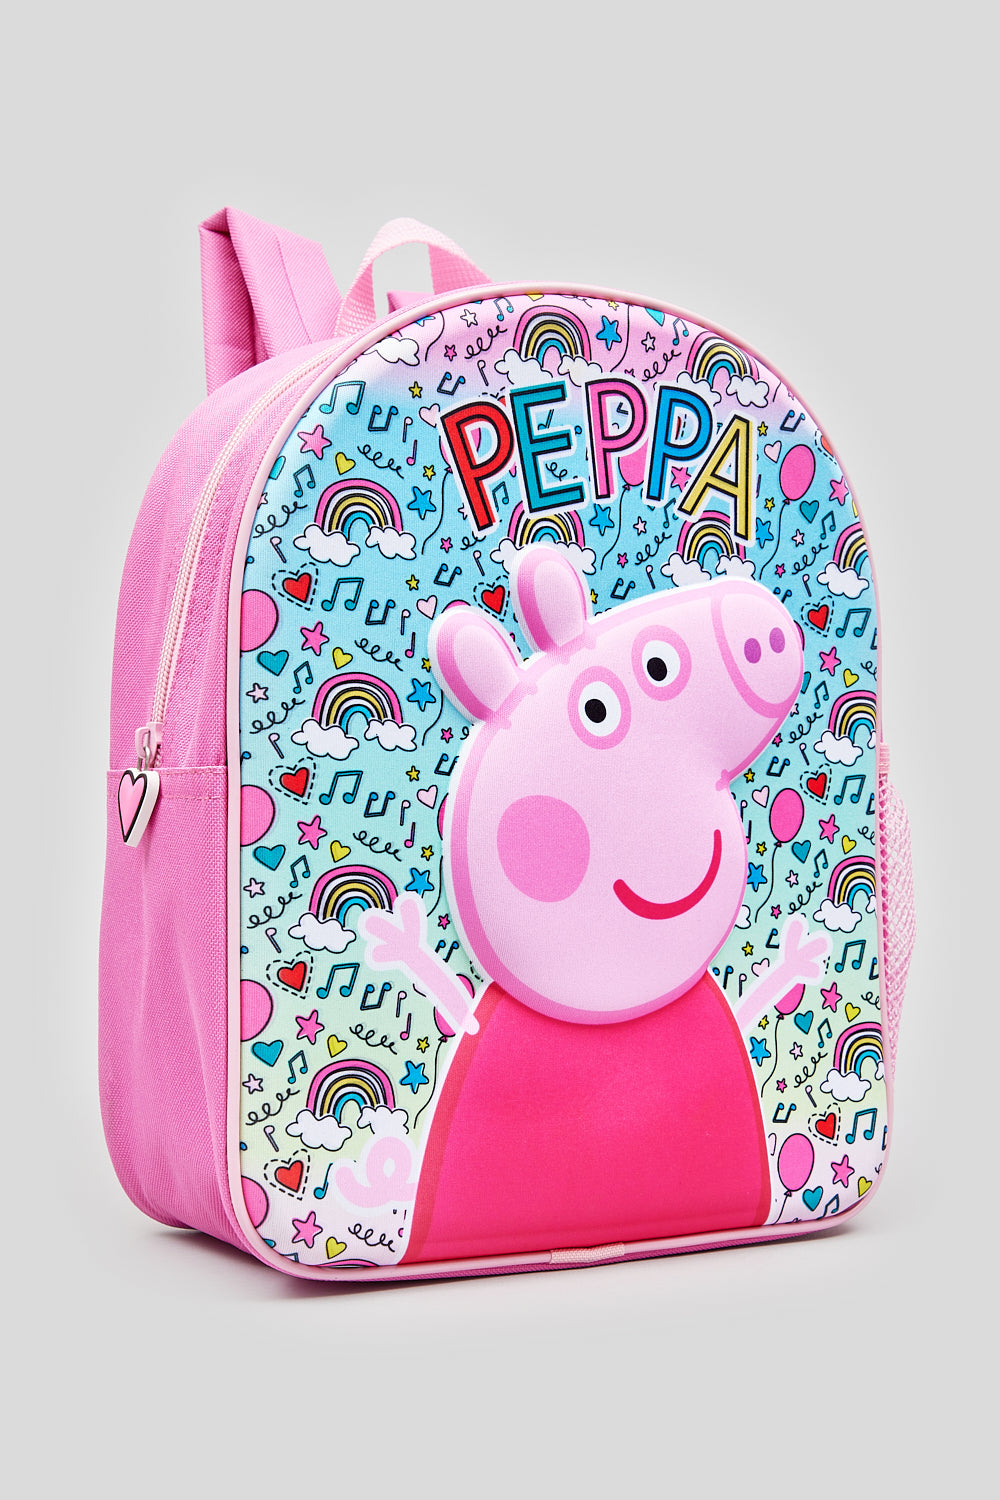 Peppa Pig Stuffed Backpack George Cartoon Cartoon Character Kawai Yi Bao  Shoulder Bag Girl Zero Wallet Pack Children's Birthday